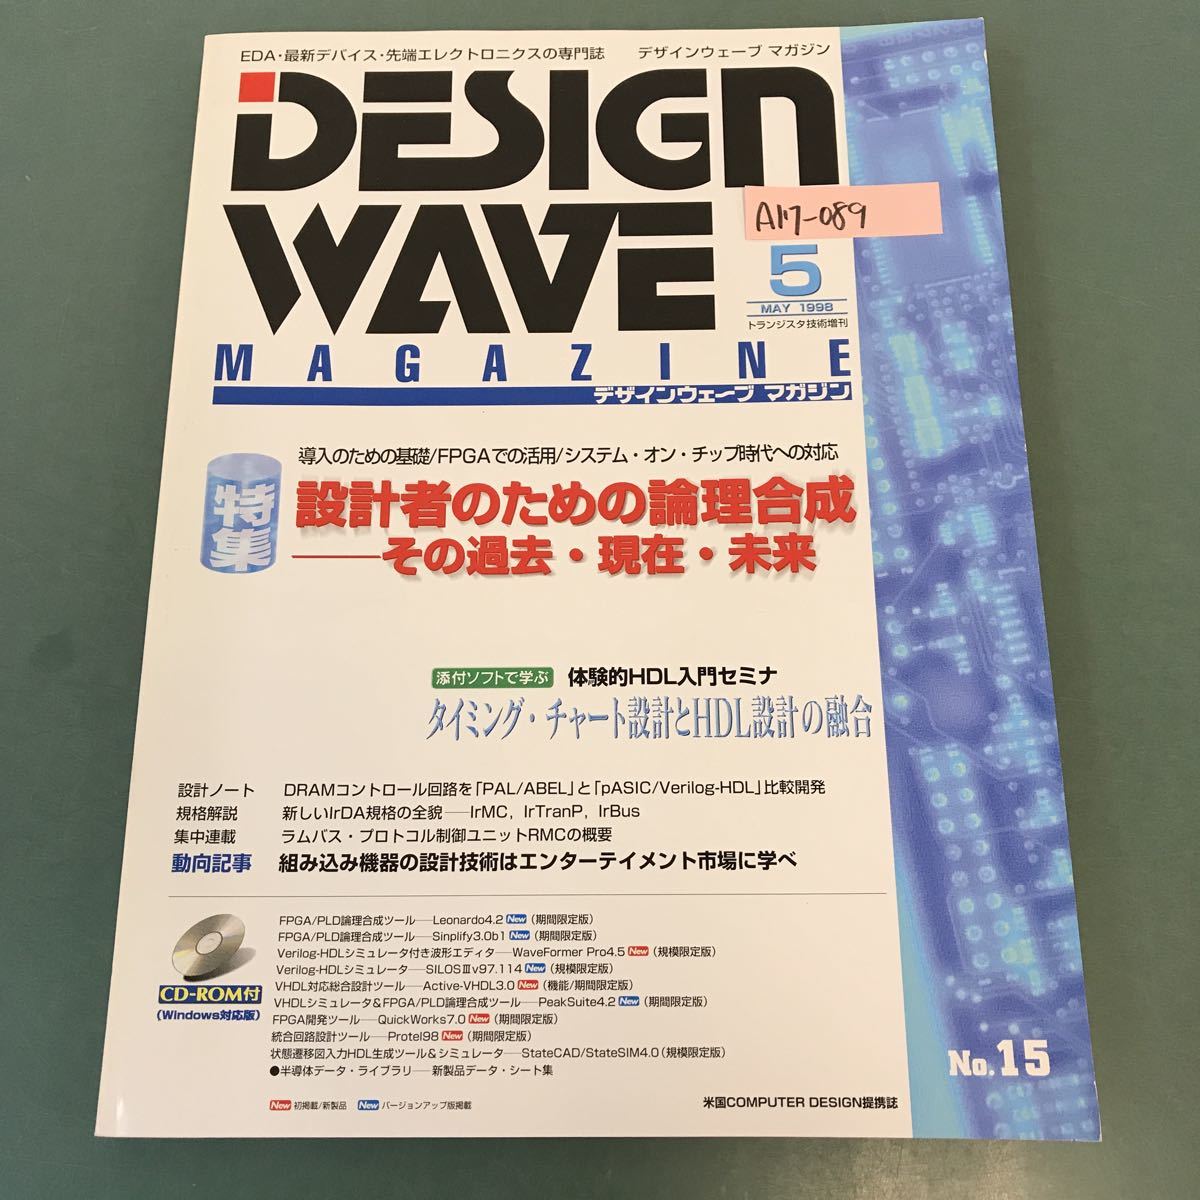 A17-089 DESIGN WAVE MAGAZINE 1998年 5月号 No.15 特集 設計者のための論理合成 その過去・現在・未来 CQ出版社